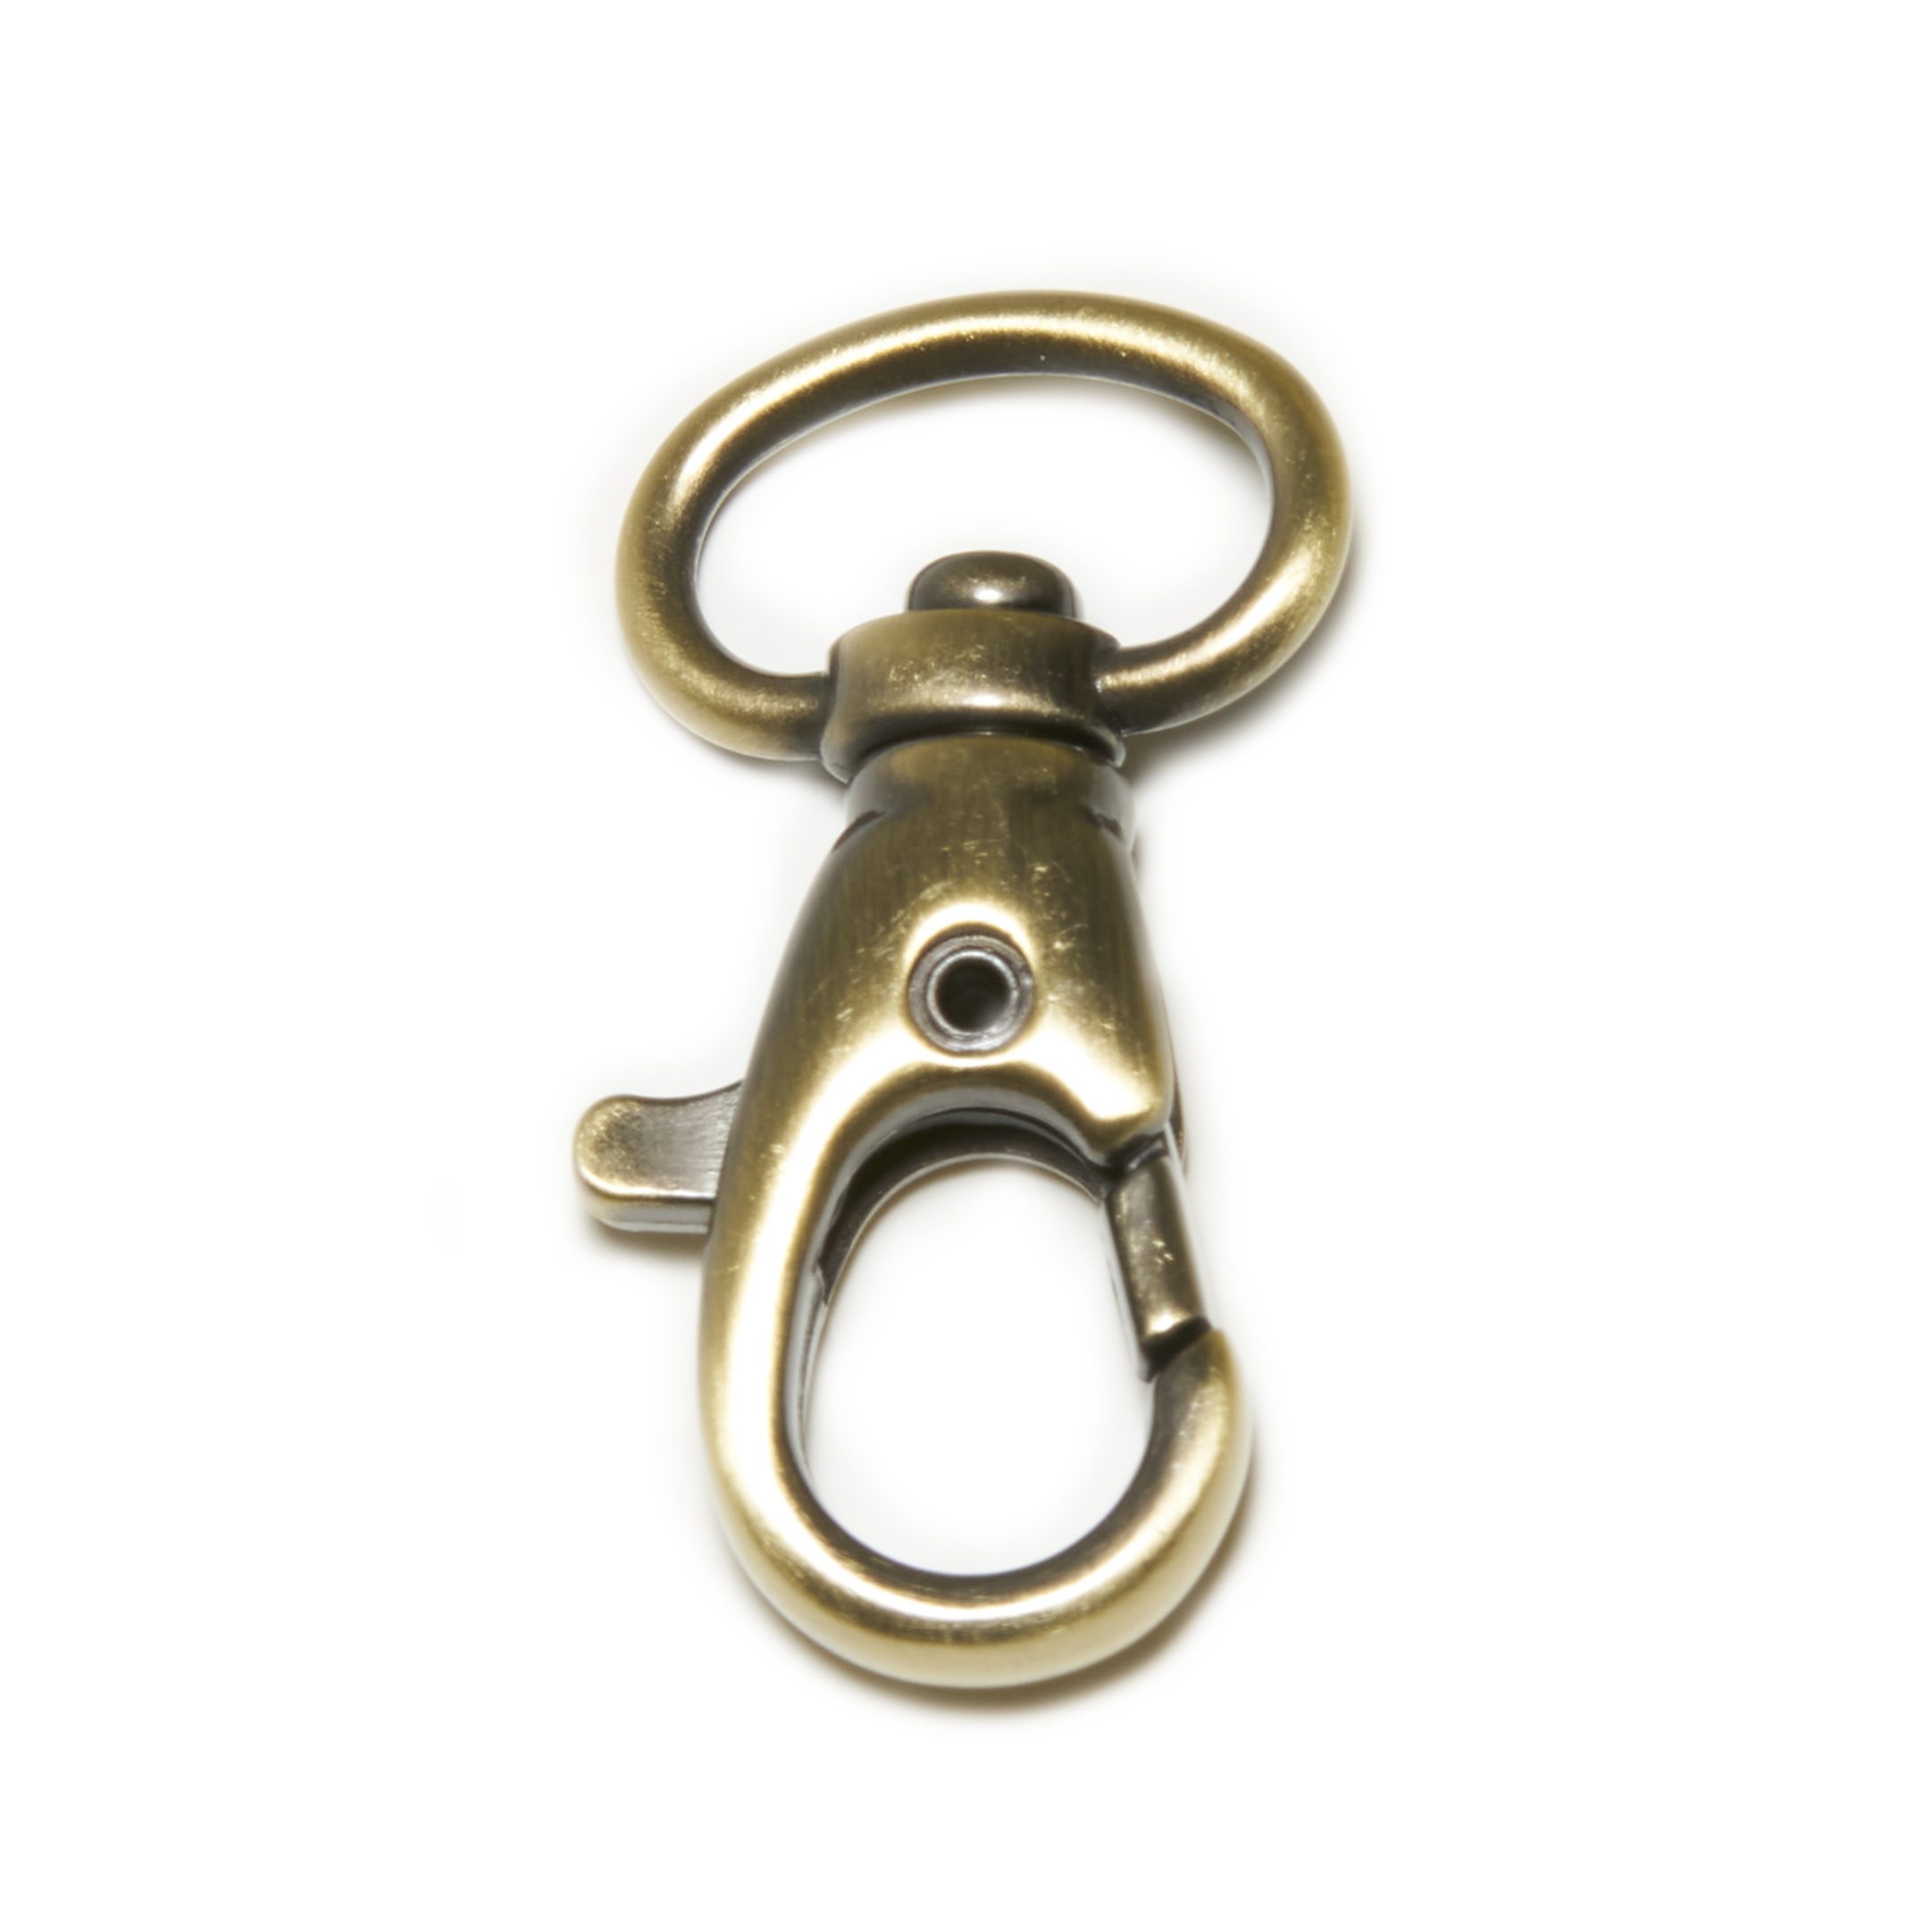 Leather Keychain clasp